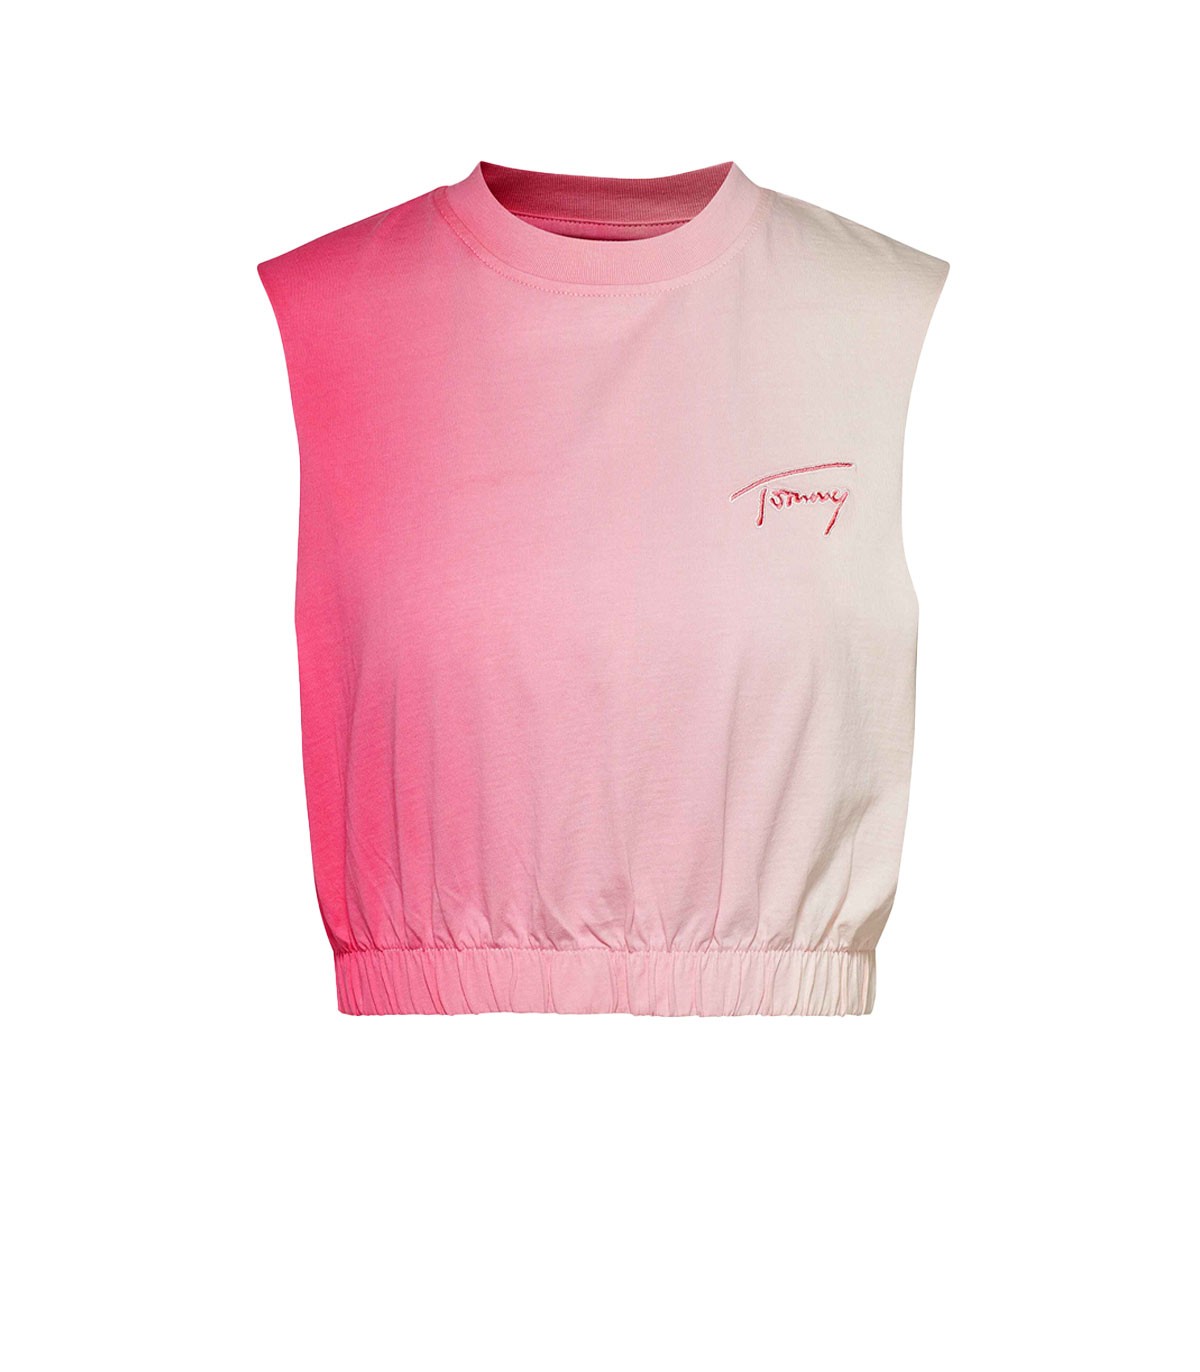 Tommy Hilfiger - Camiseta Corta sin Mangas - Rosa